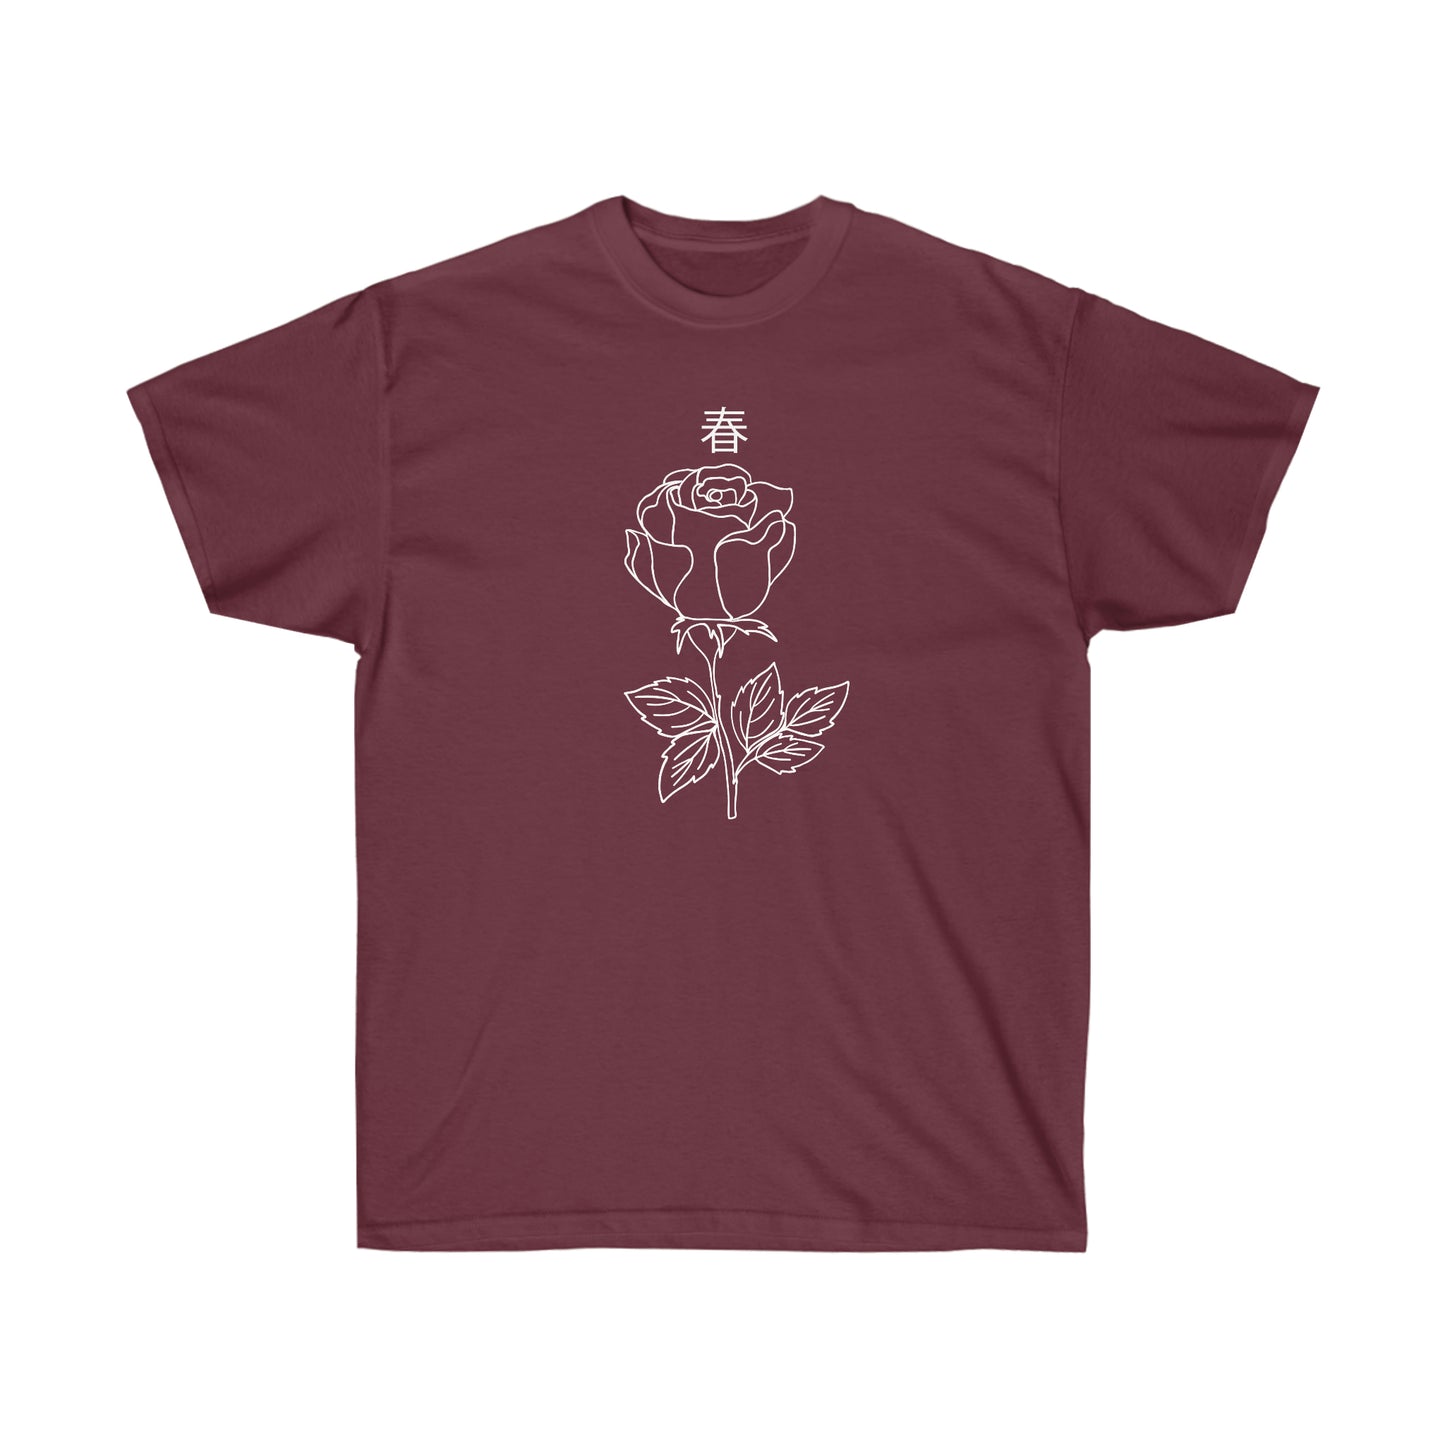 Bleeding Rose shirt Soft Grunge Minimal Aesthetic Shirt, Black Alternative Clothing, Edgy Outfit, Pastel Goth Gift, Emo, E-boy, E-girl Japan